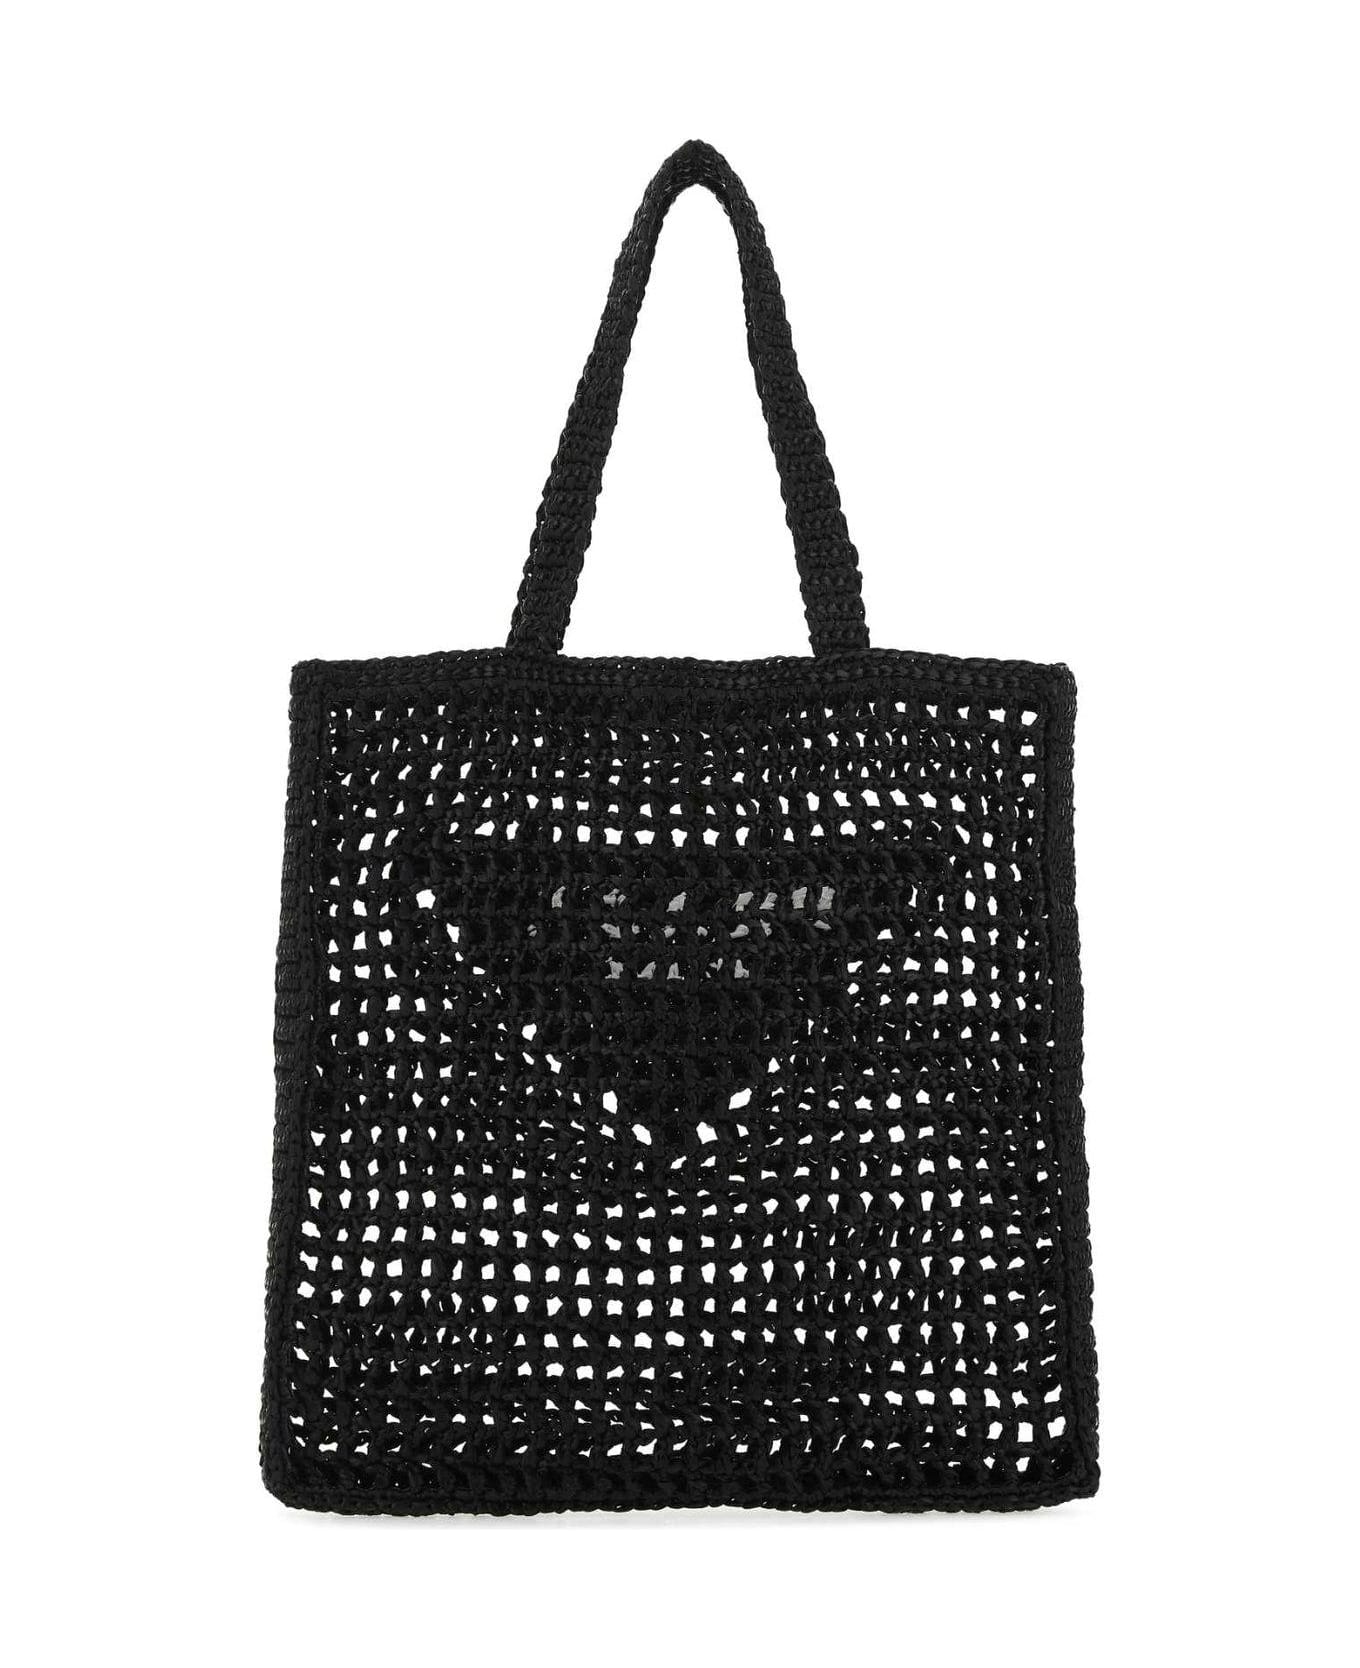 Prada Logo Embroidered Woven Tote Bag - Nero トートバッグ